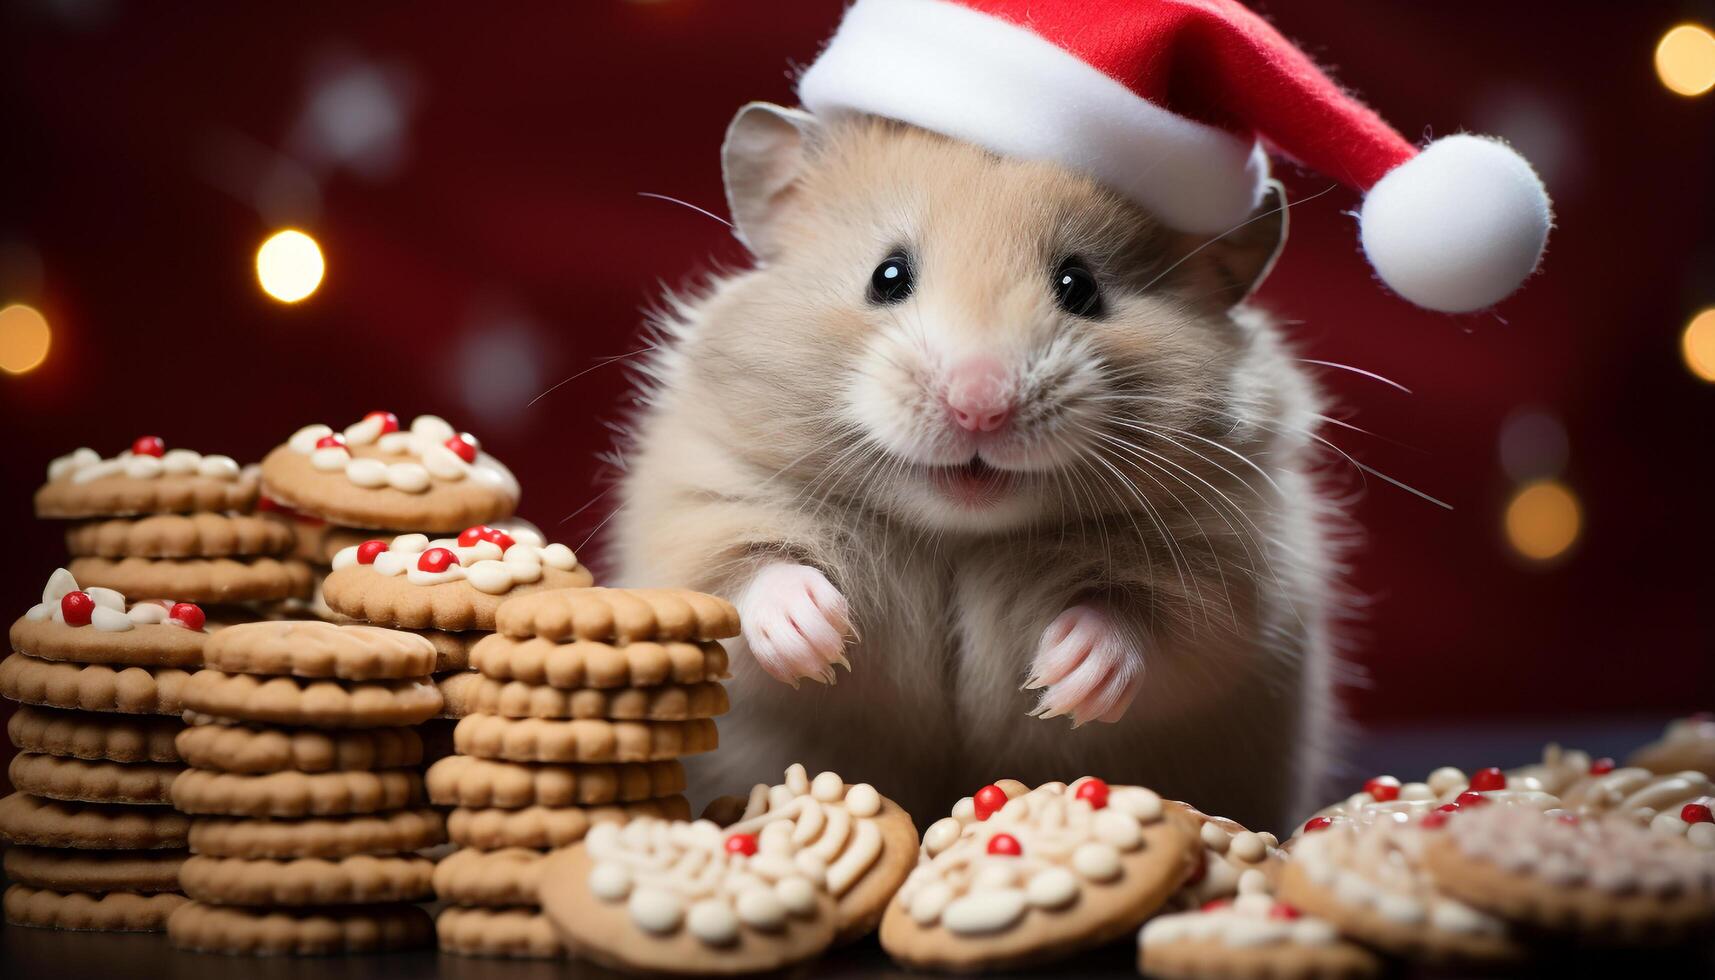 AI generated Cute small animal looking at camera, enjoying homemade sweet cookies generated by AI photo